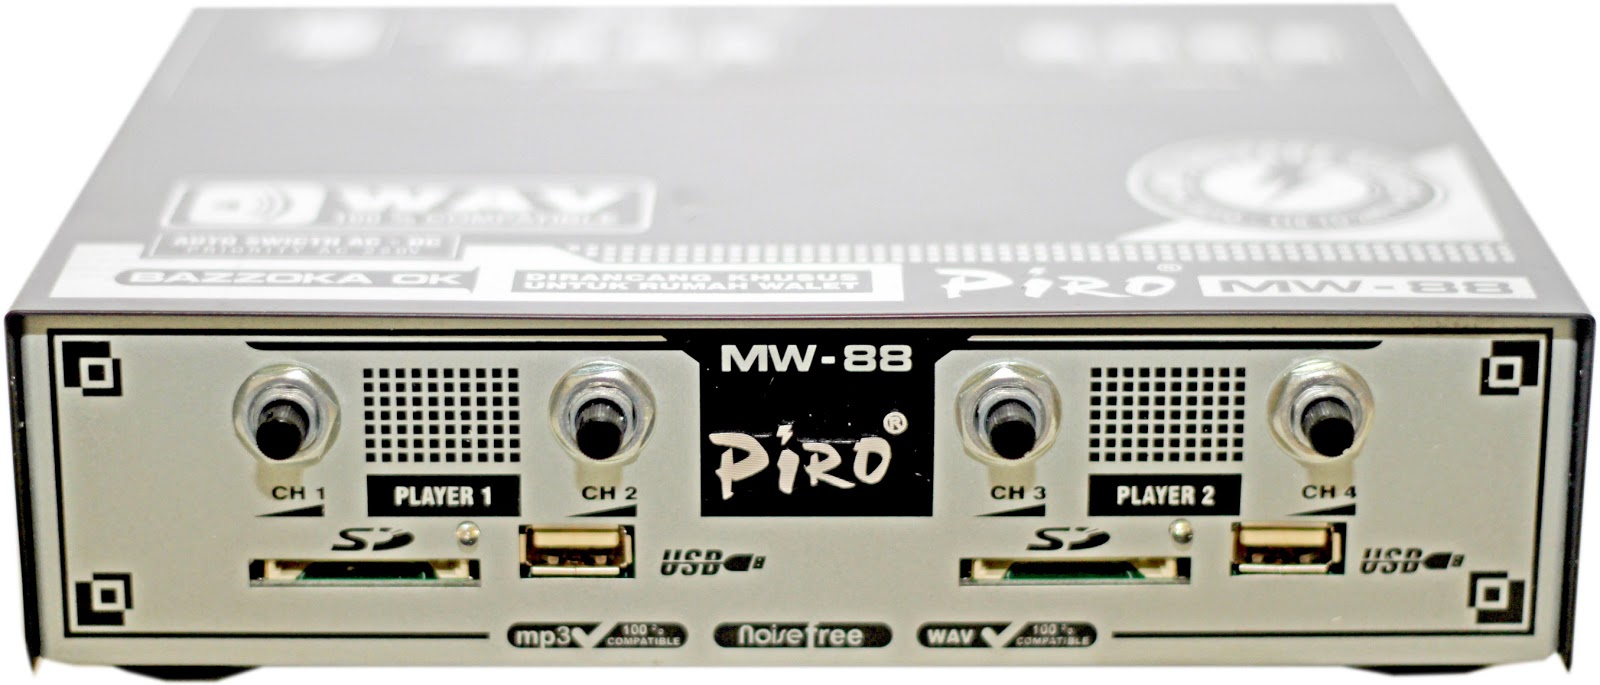 Piro MW-88 - toko-walet.com